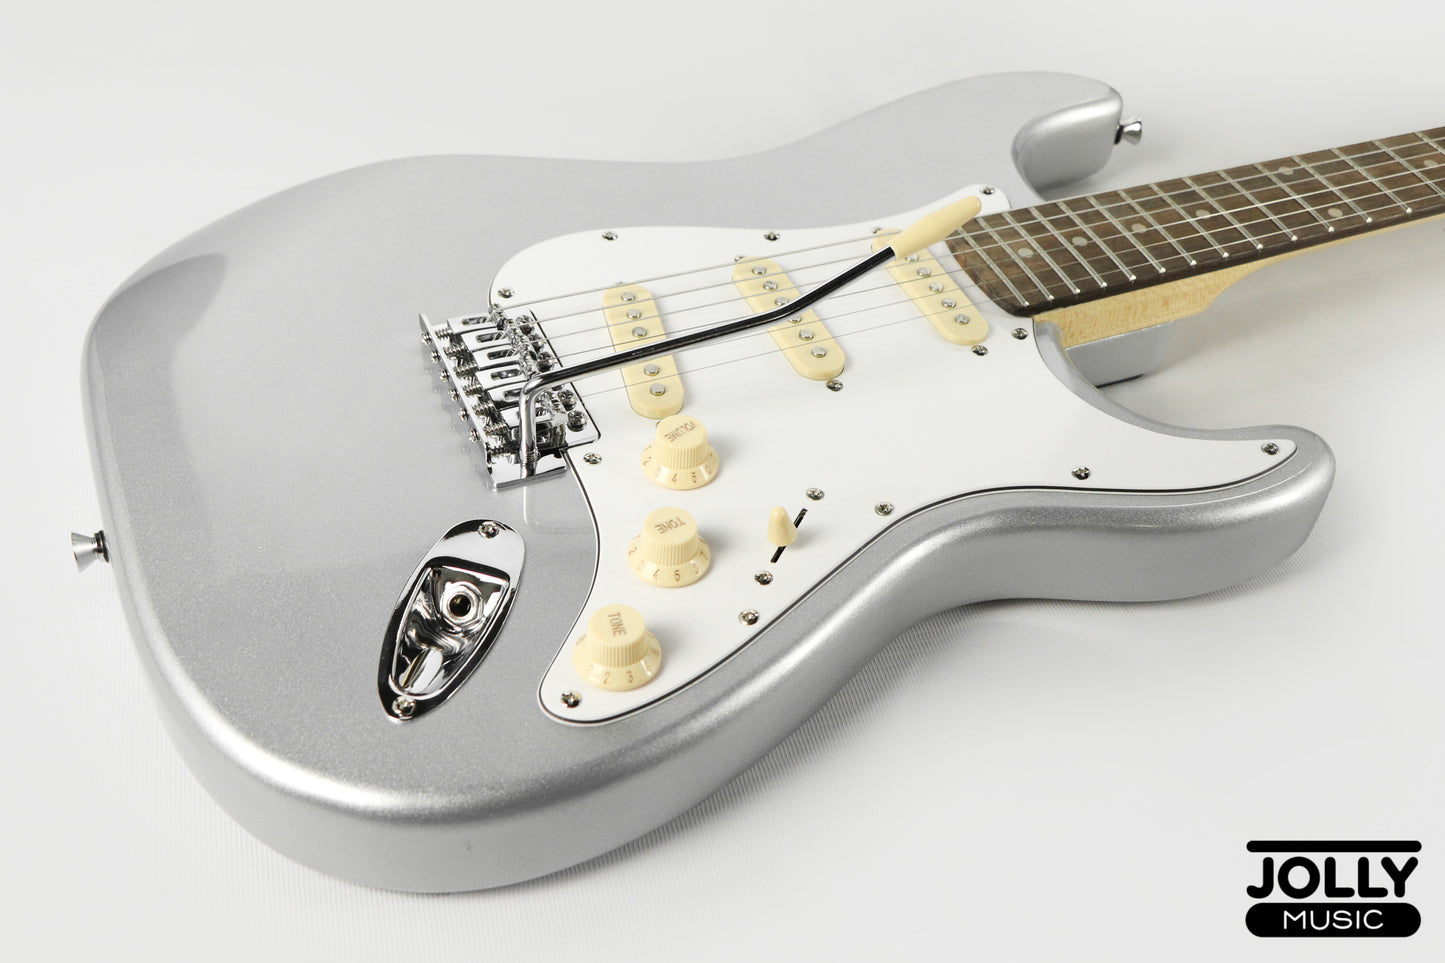 JCraft S-2 S-Style Electric Guitar - RW / Metallic Silver